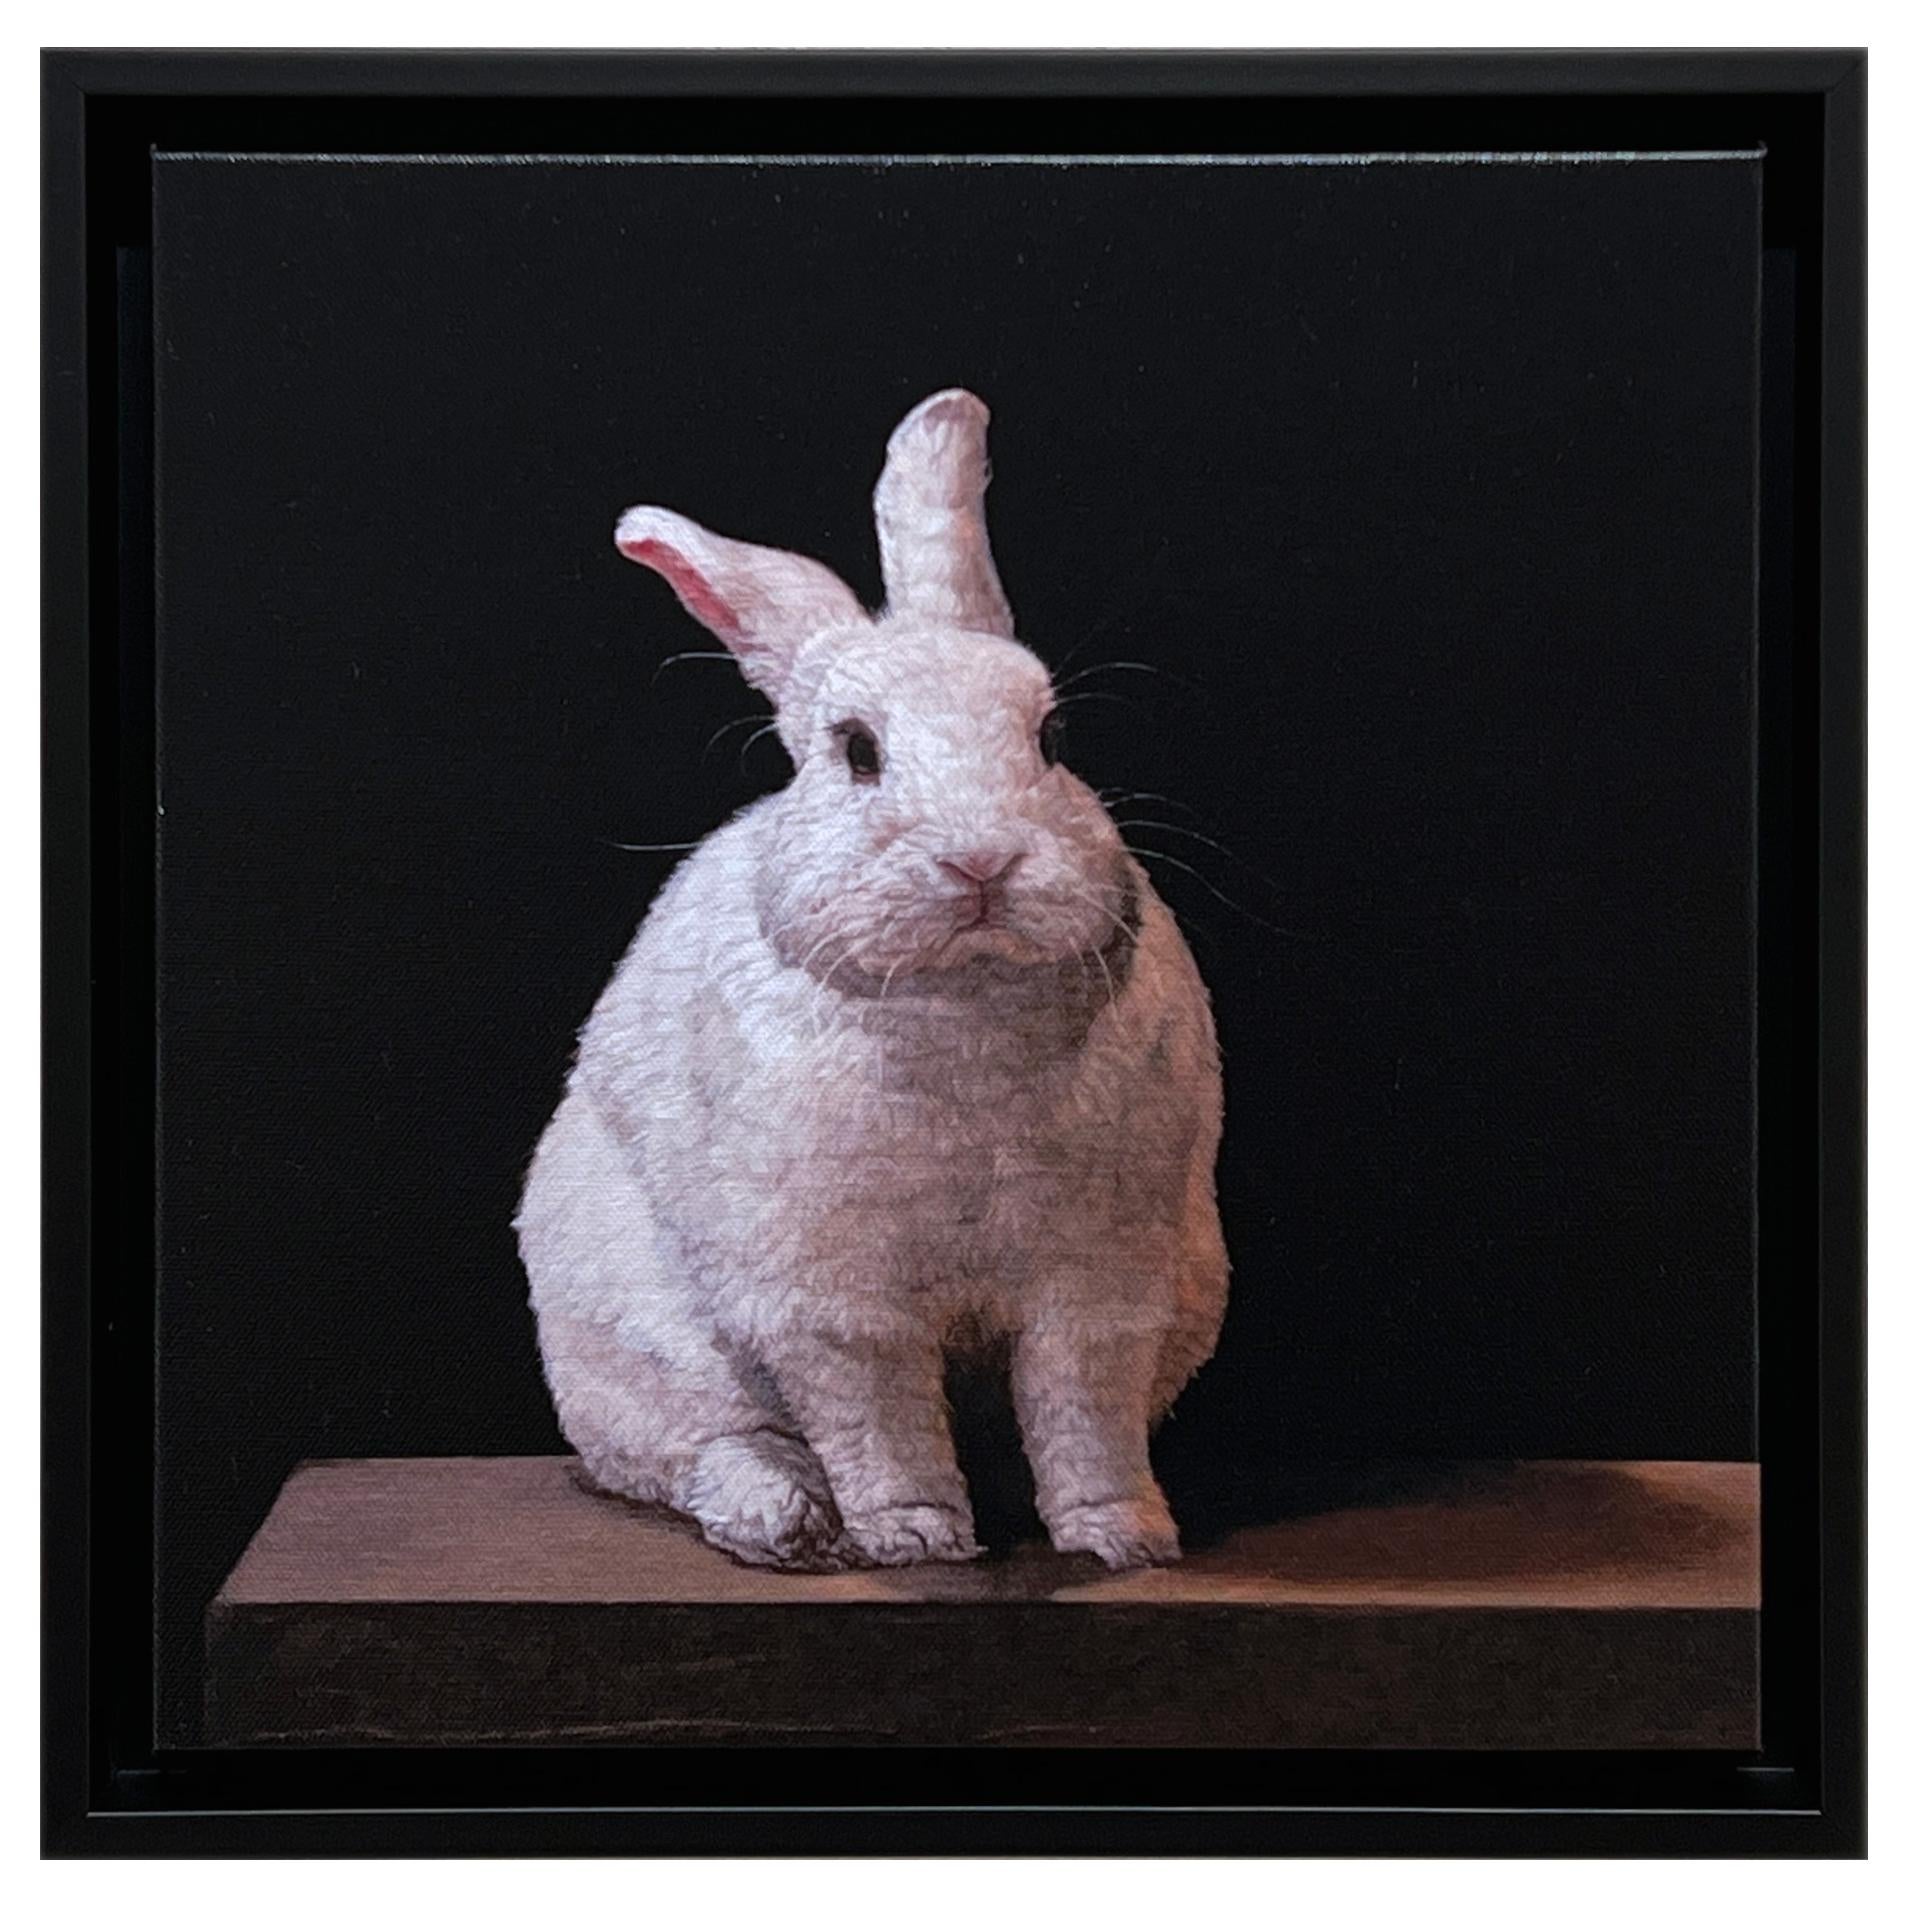 HYBRID RABBIT - Contemporary / photorealism / animal print 